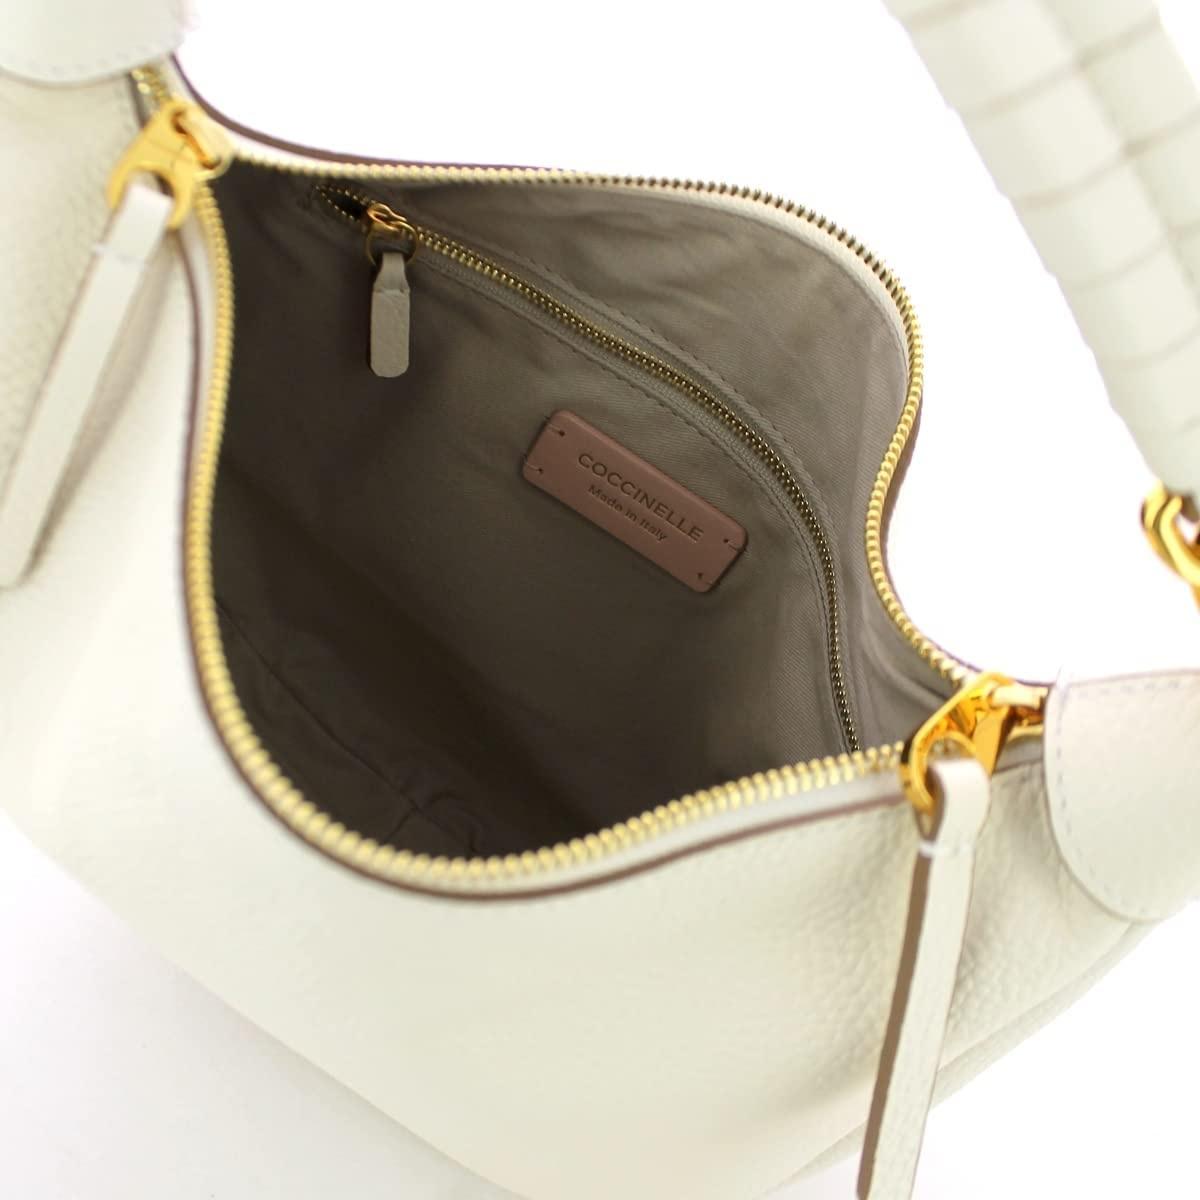 Maelody handbag grained leather